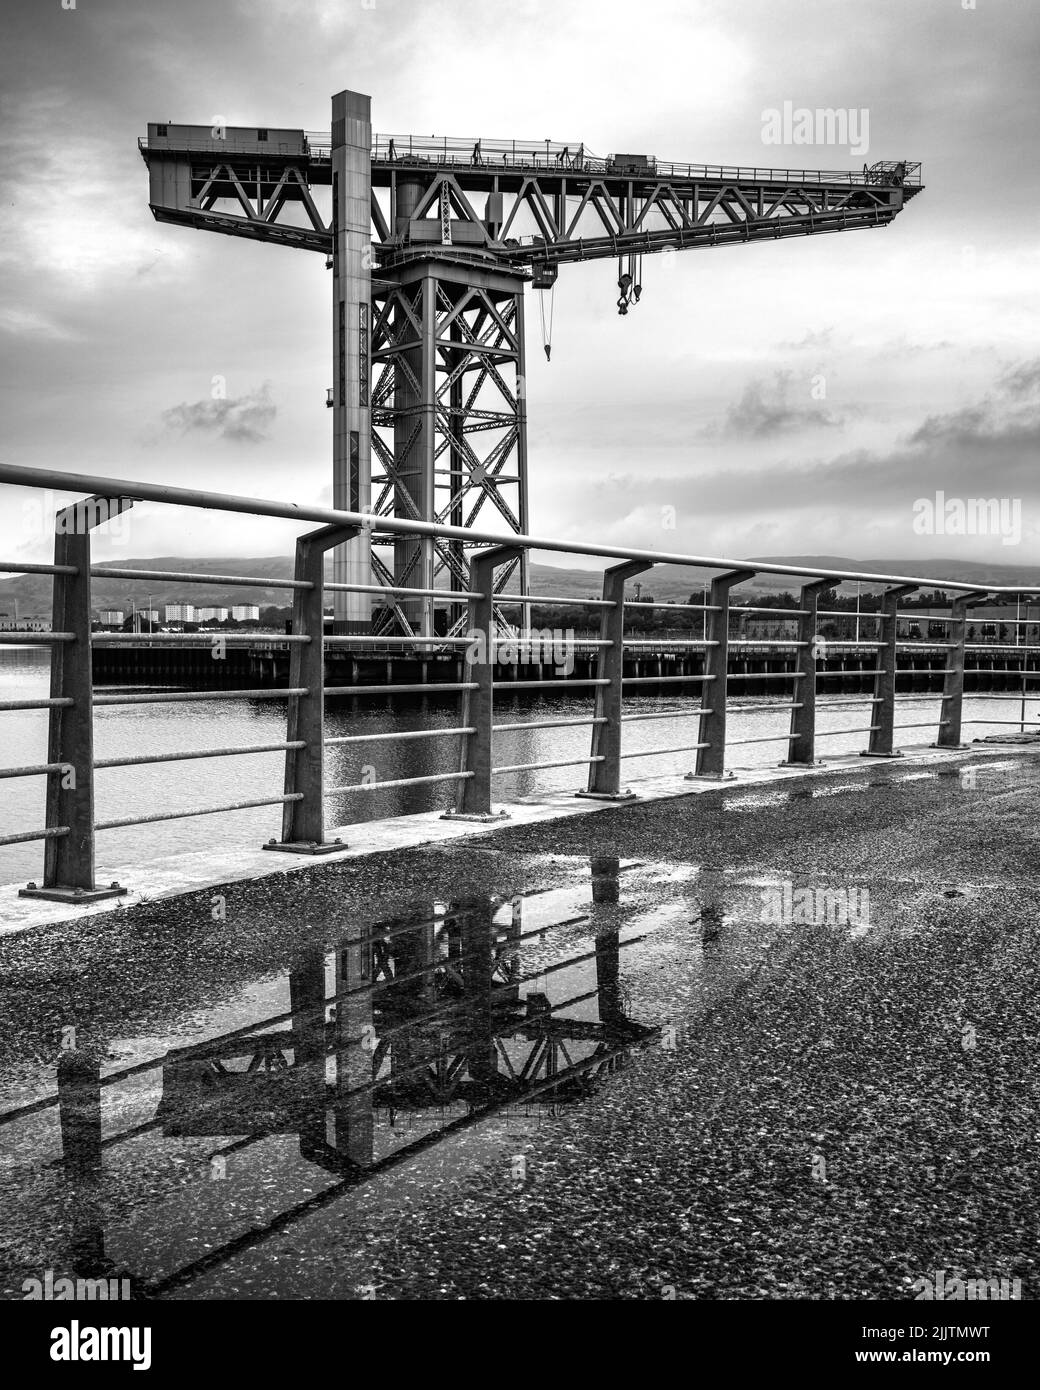 Titan shipbuilding crane in a historical dockyard in Clydebank, Scotland Stock Photo